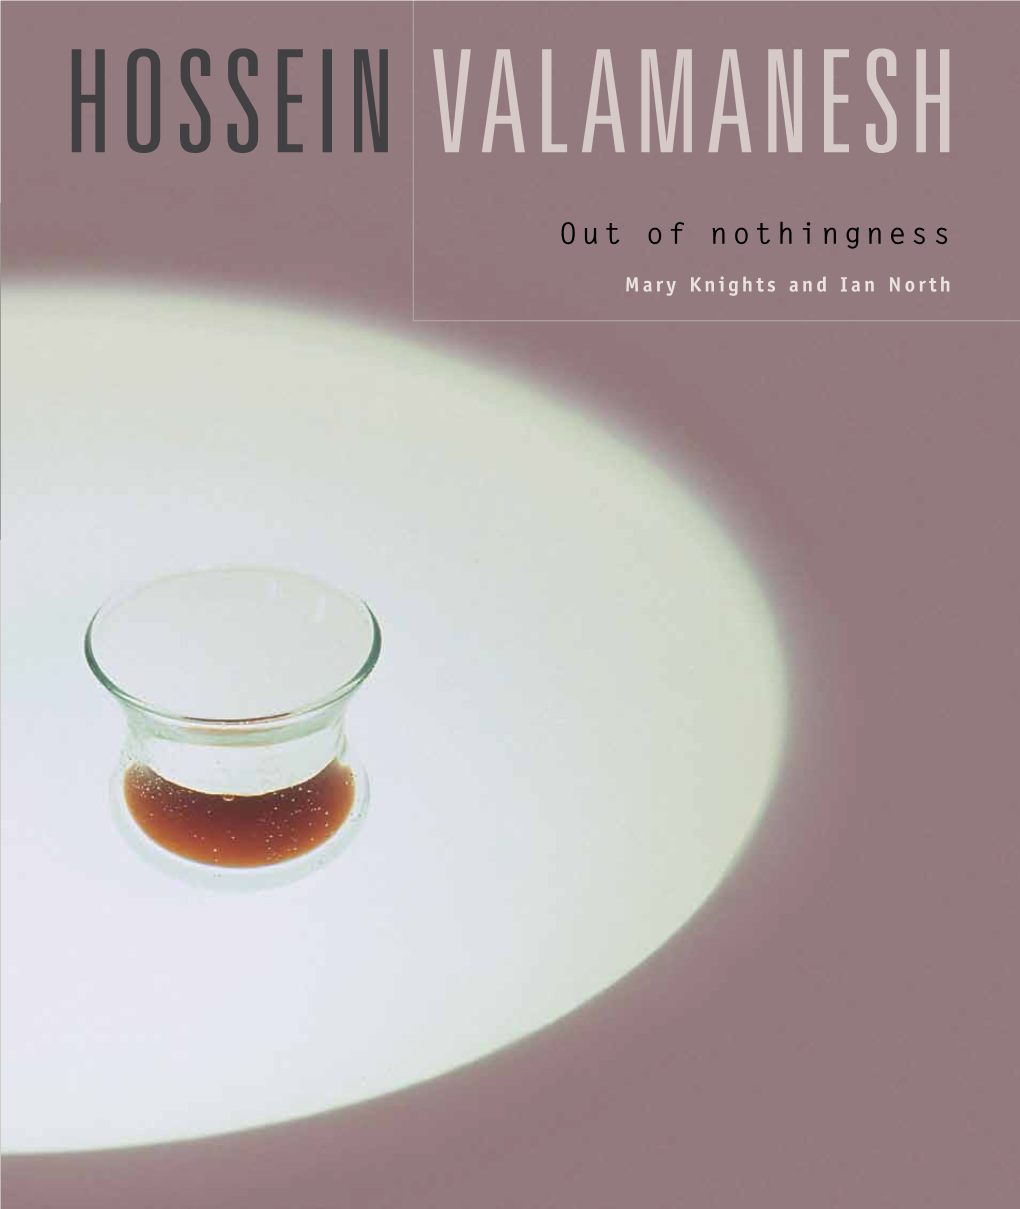 Hossein Valamanesh: a Survey – Hossein Valamanesh